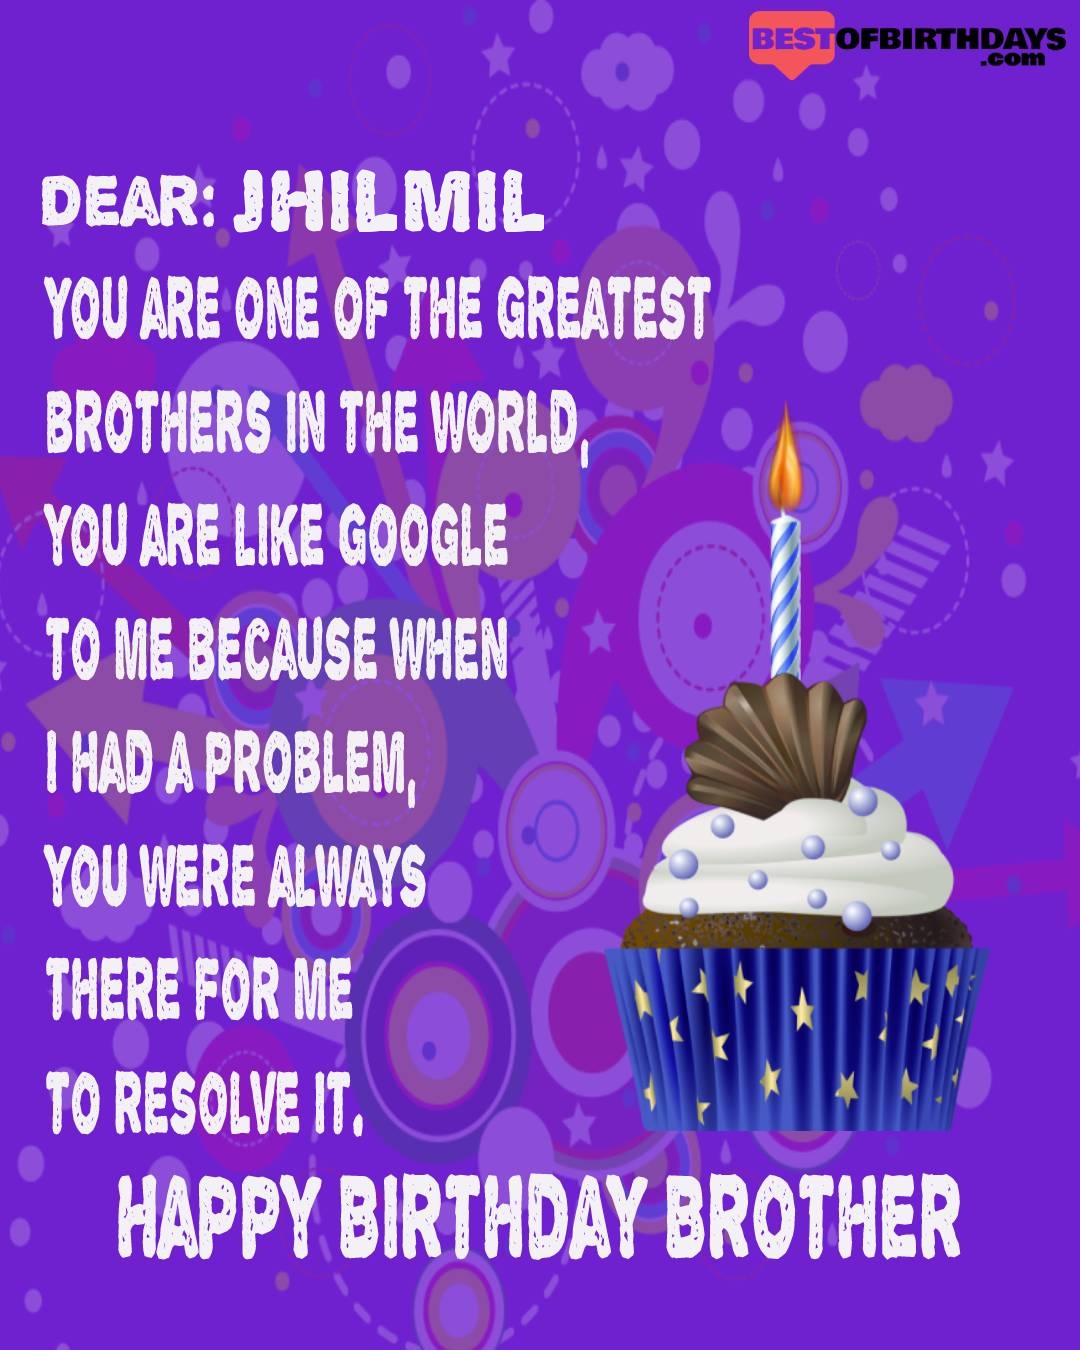 Happy birthday jhilmil bhai brother bro